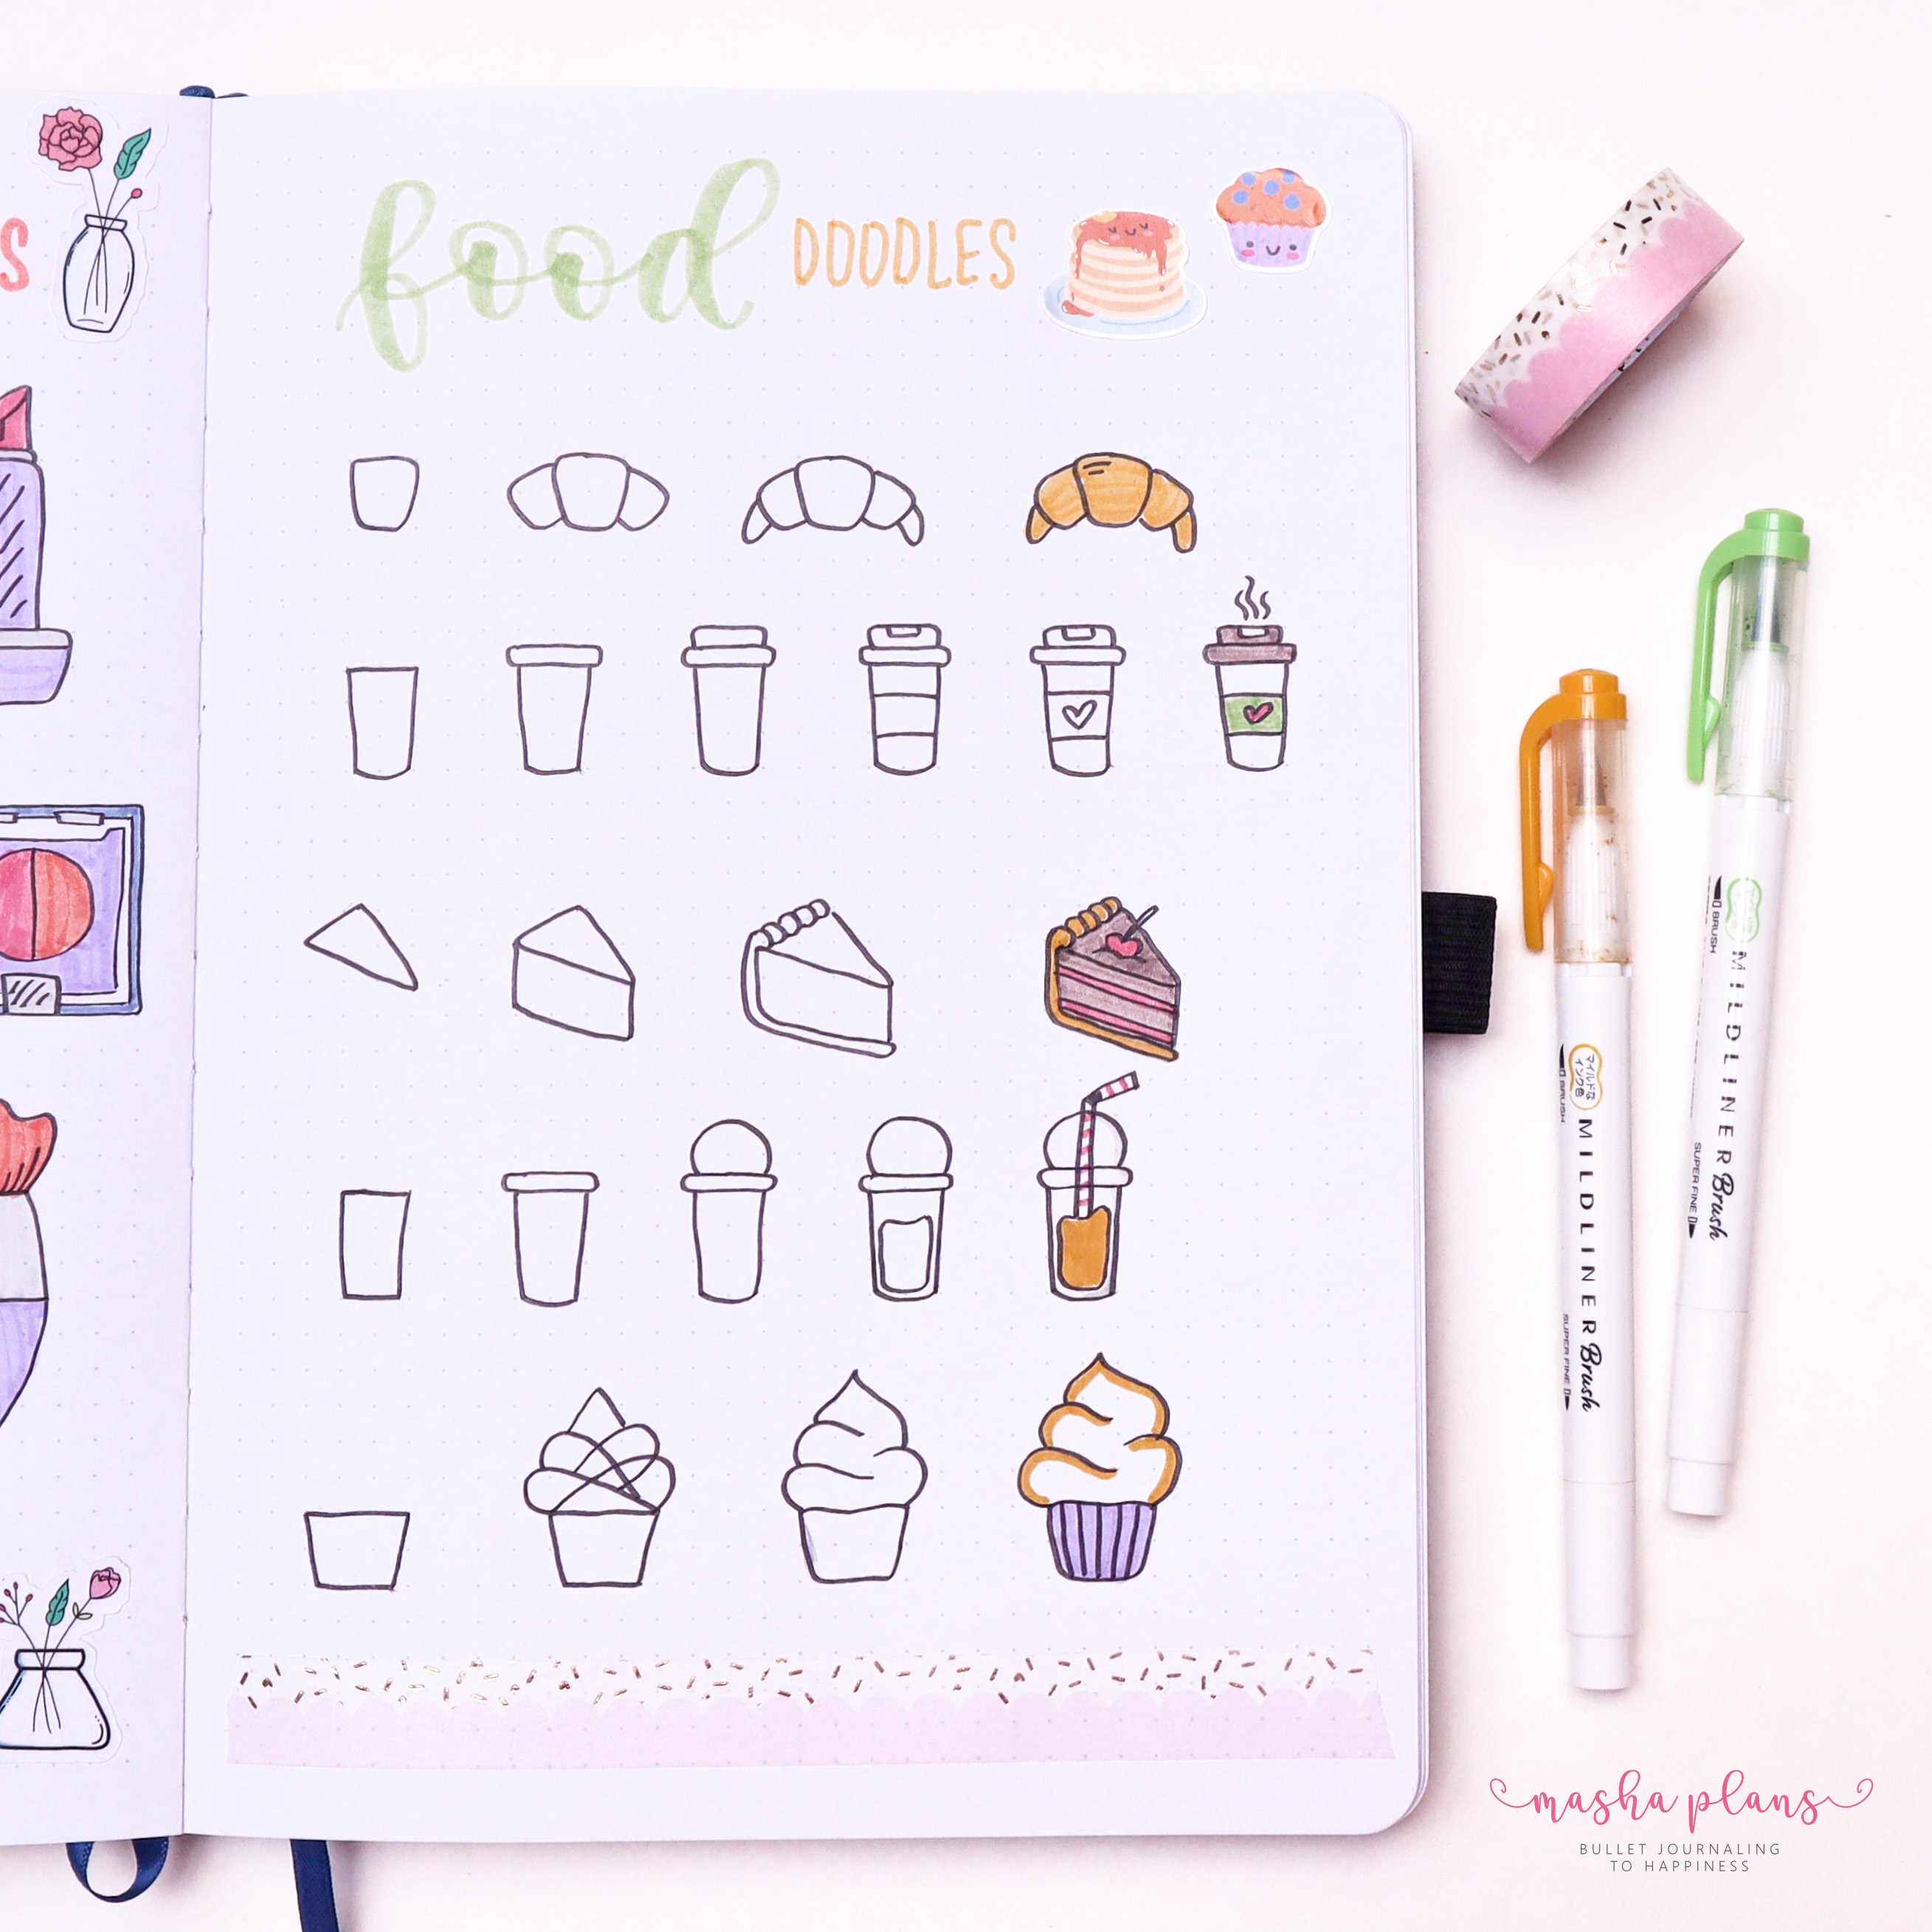 food doodles, bullet journal doodles, doodling fun, how to doodle, tutorial, masha plans, archer and olive